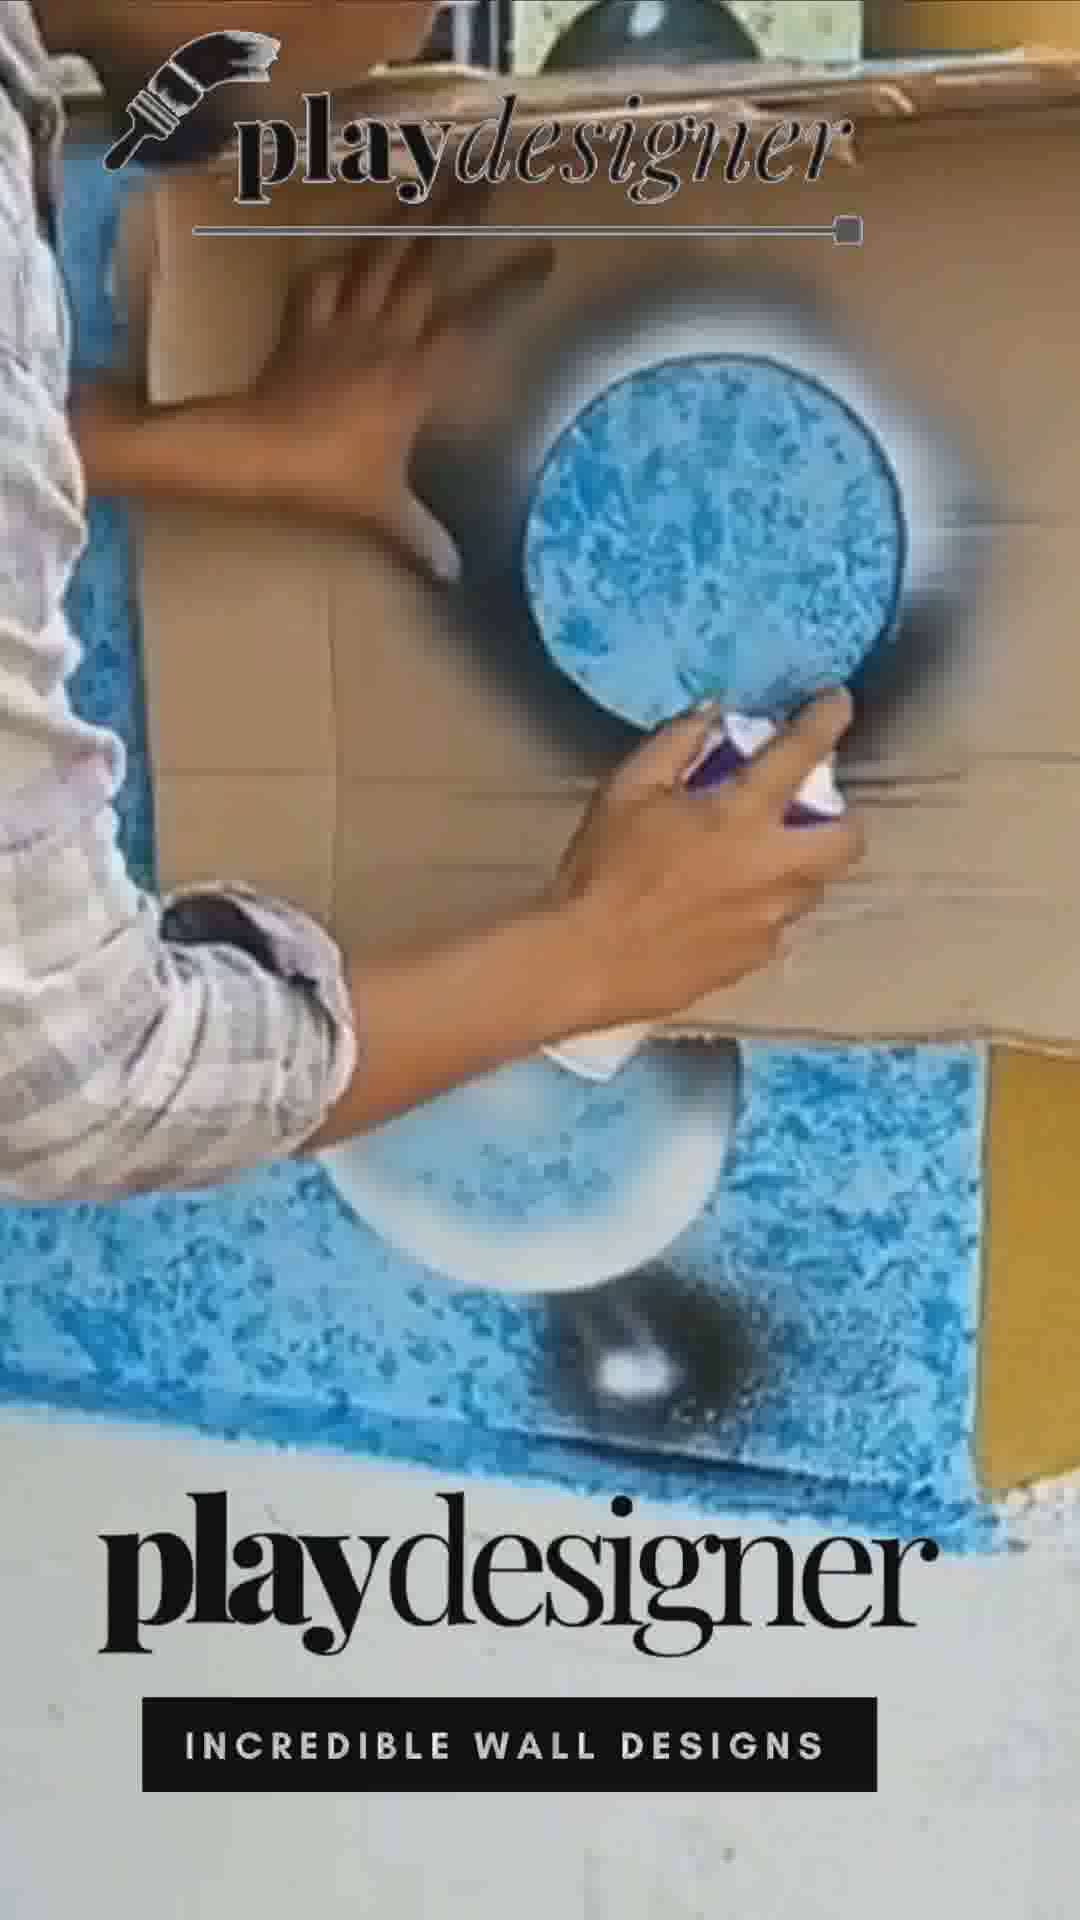 3D bubbles wall painting designe,
#3DPainting #3Dbubbles #InteriorDesigner